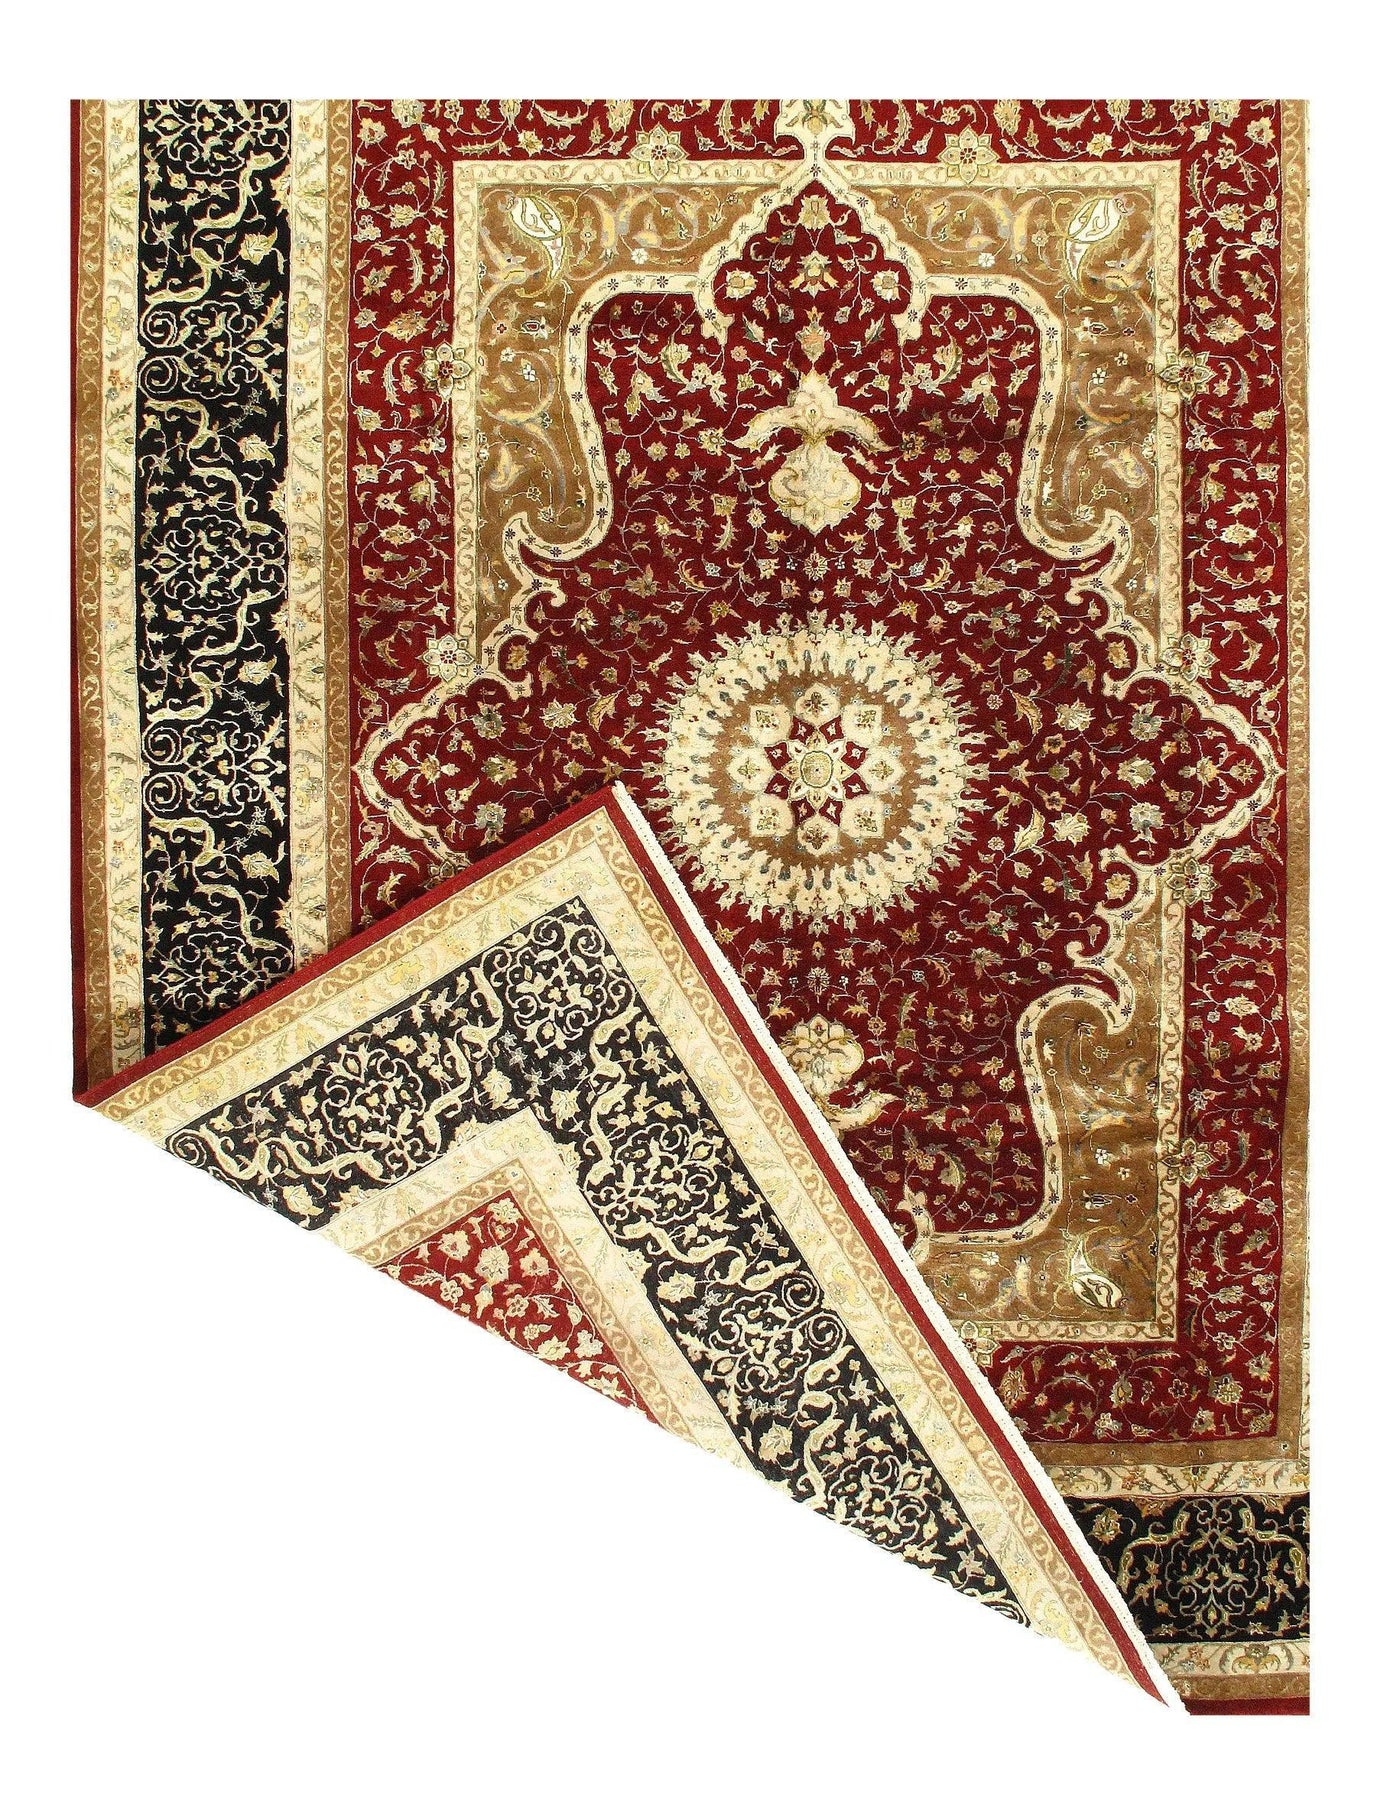 Red Persian Tabriz Design rug - 9' X 12'